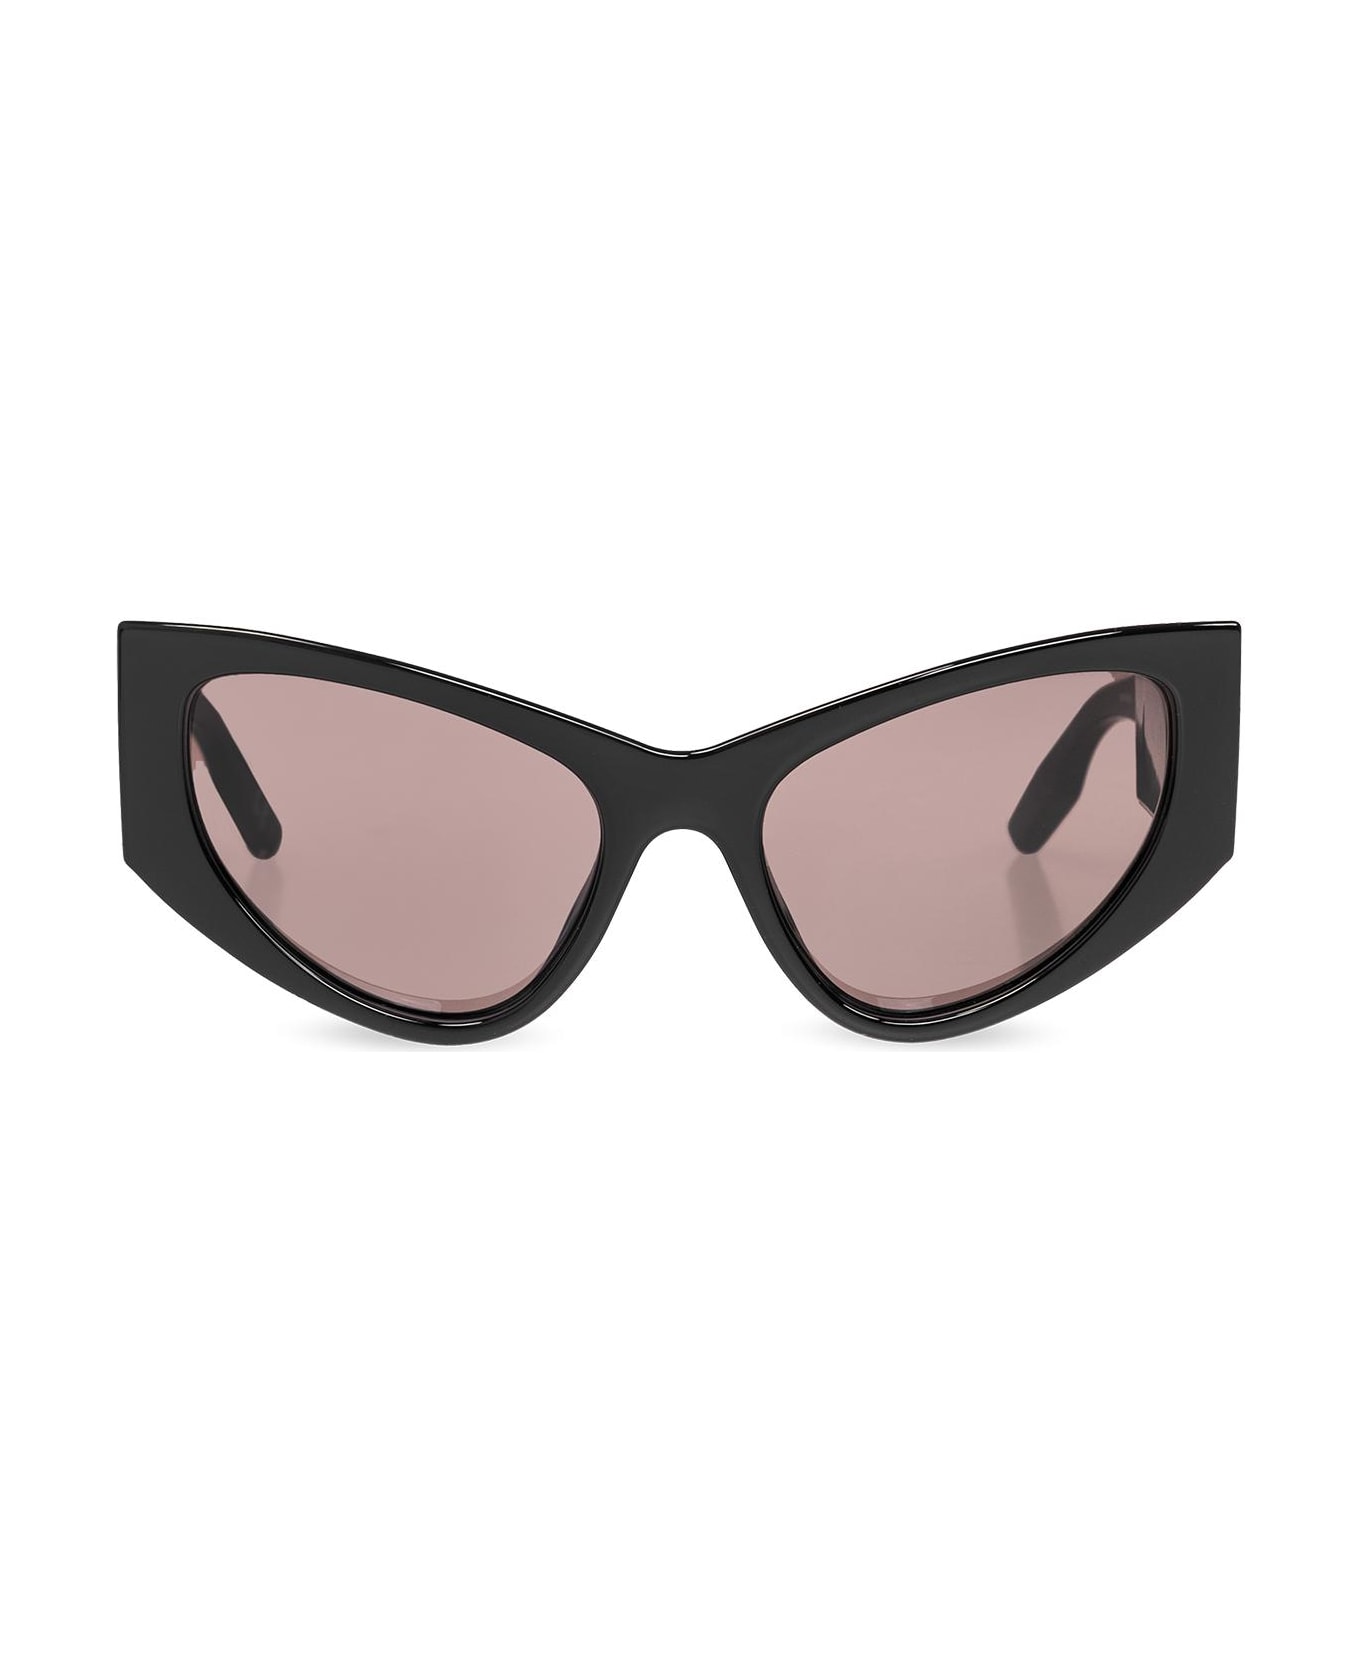 Balenciaga Eyewear Cat-eye Sunglasses - Black